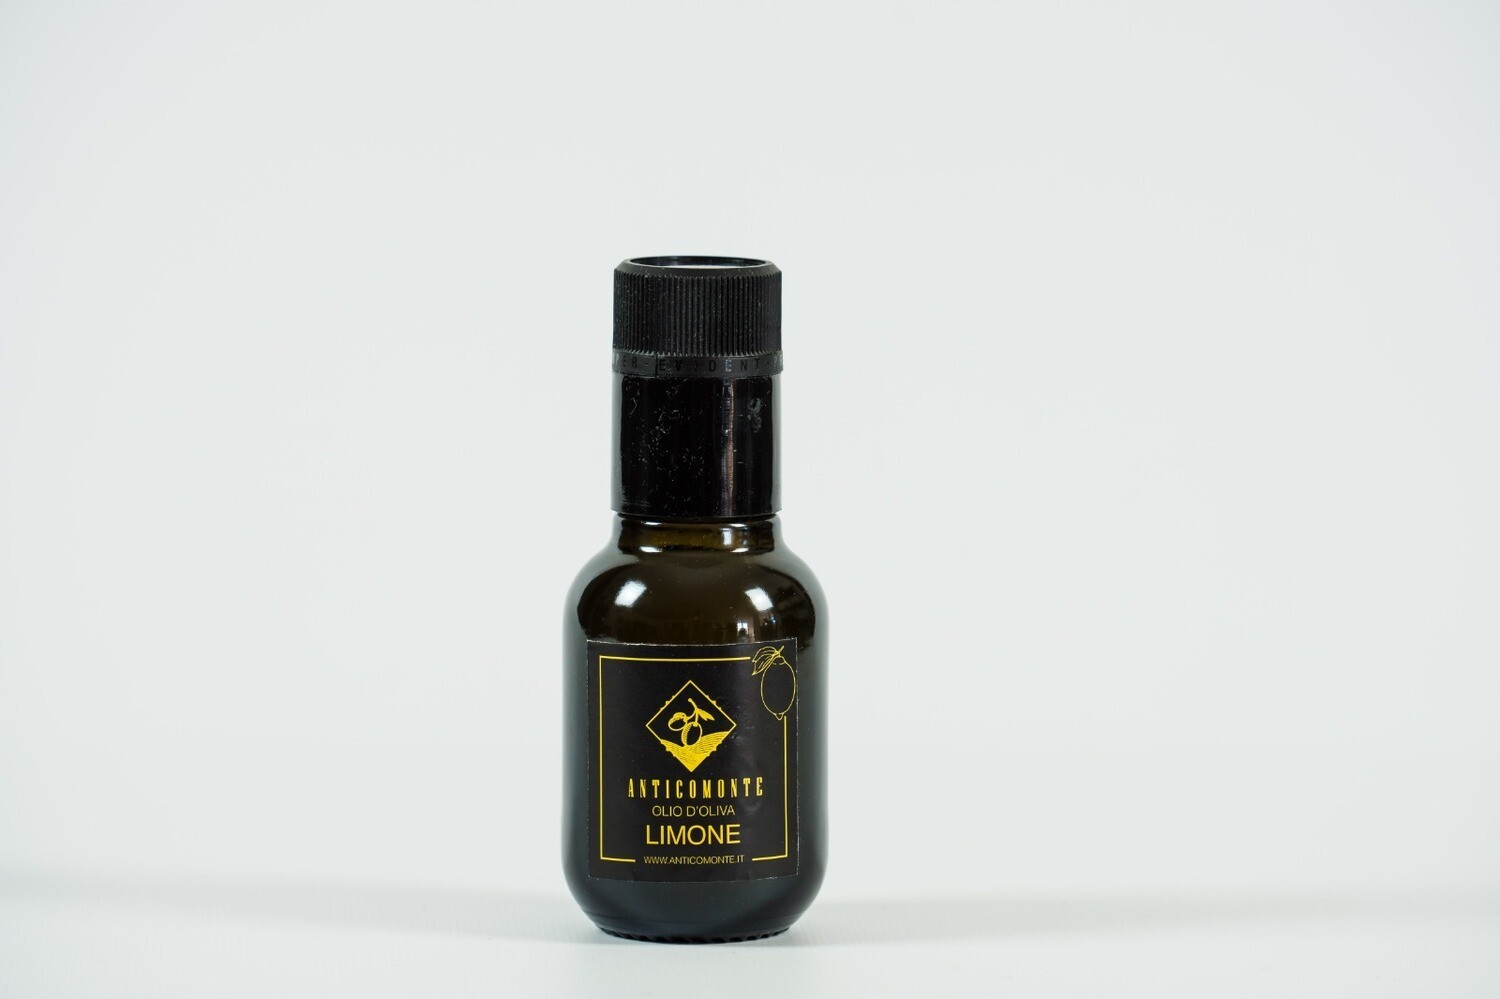 OLIO Extravergine di oliva - Tonda - Aromatizzato Limone 100ml